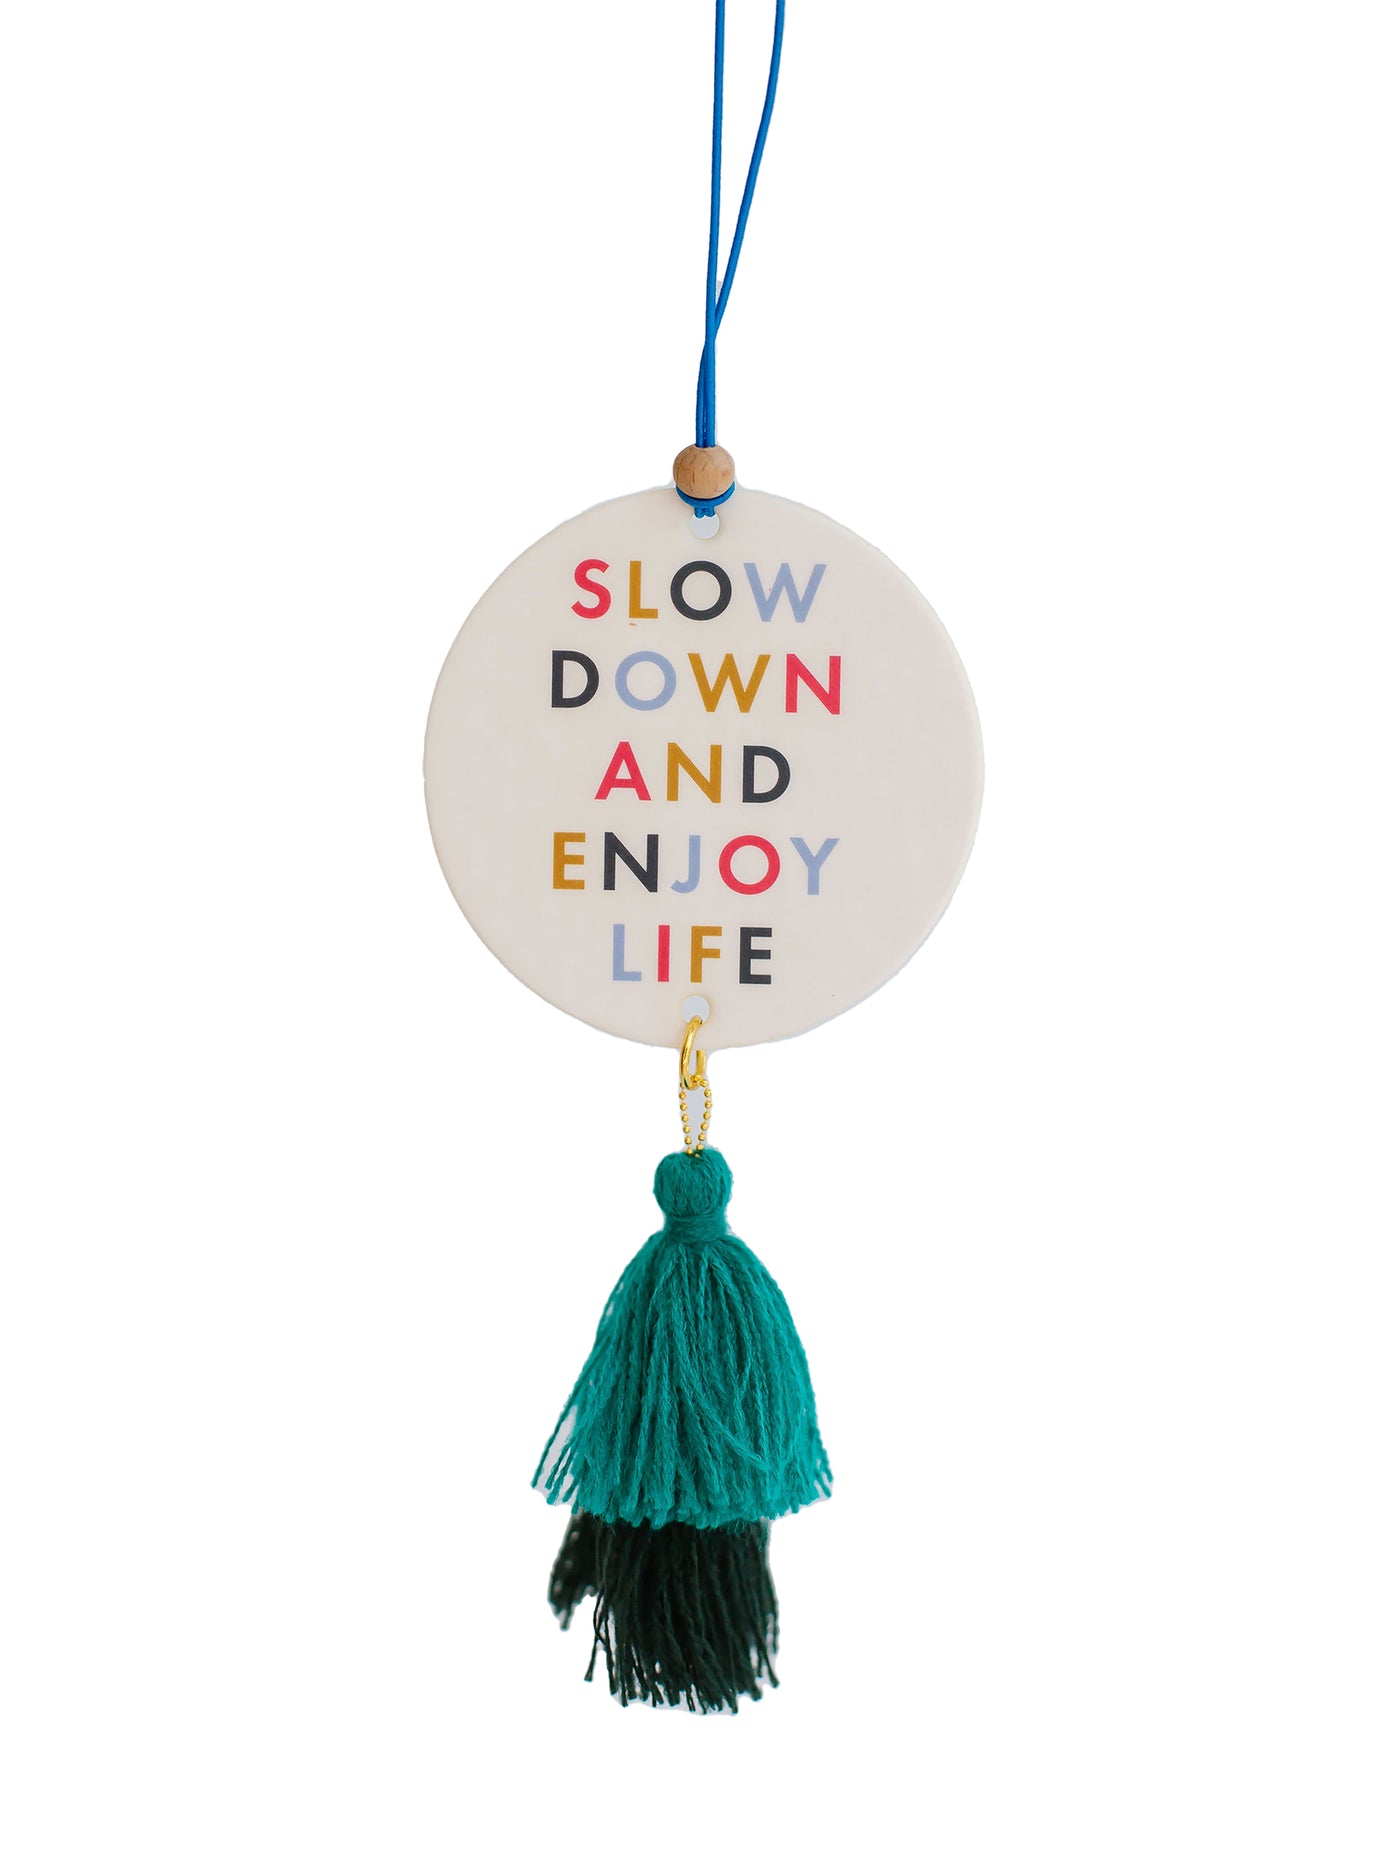 Slow Down And Enjoy Life | Air Freshener - Mary Square, LLC